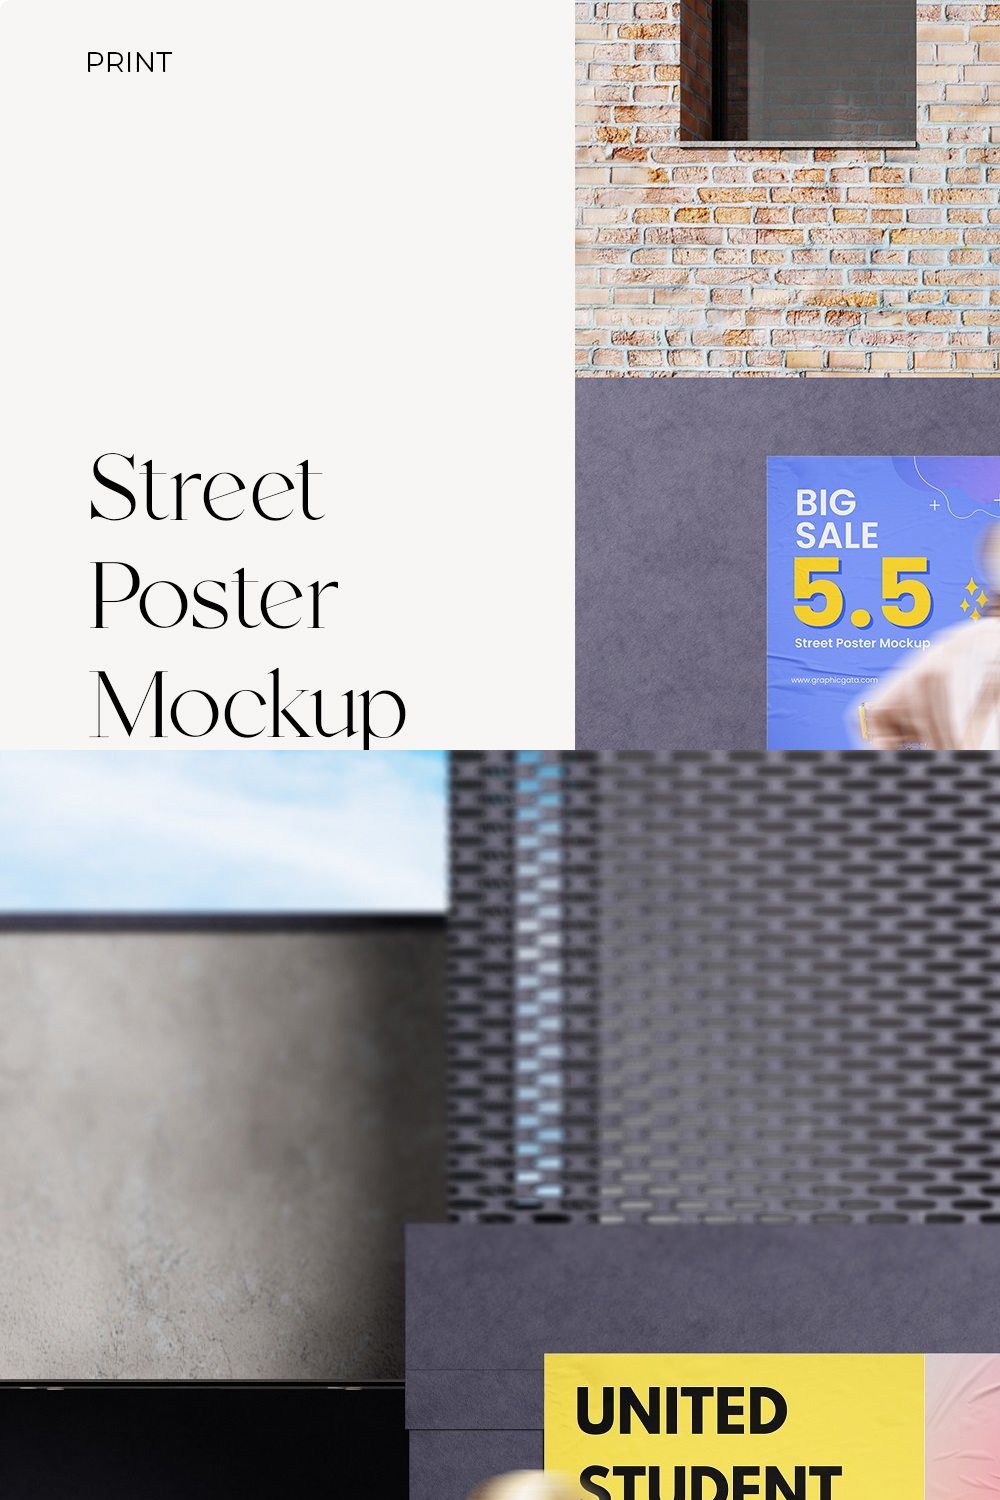 Street Poster Mockup pinterest preview image.